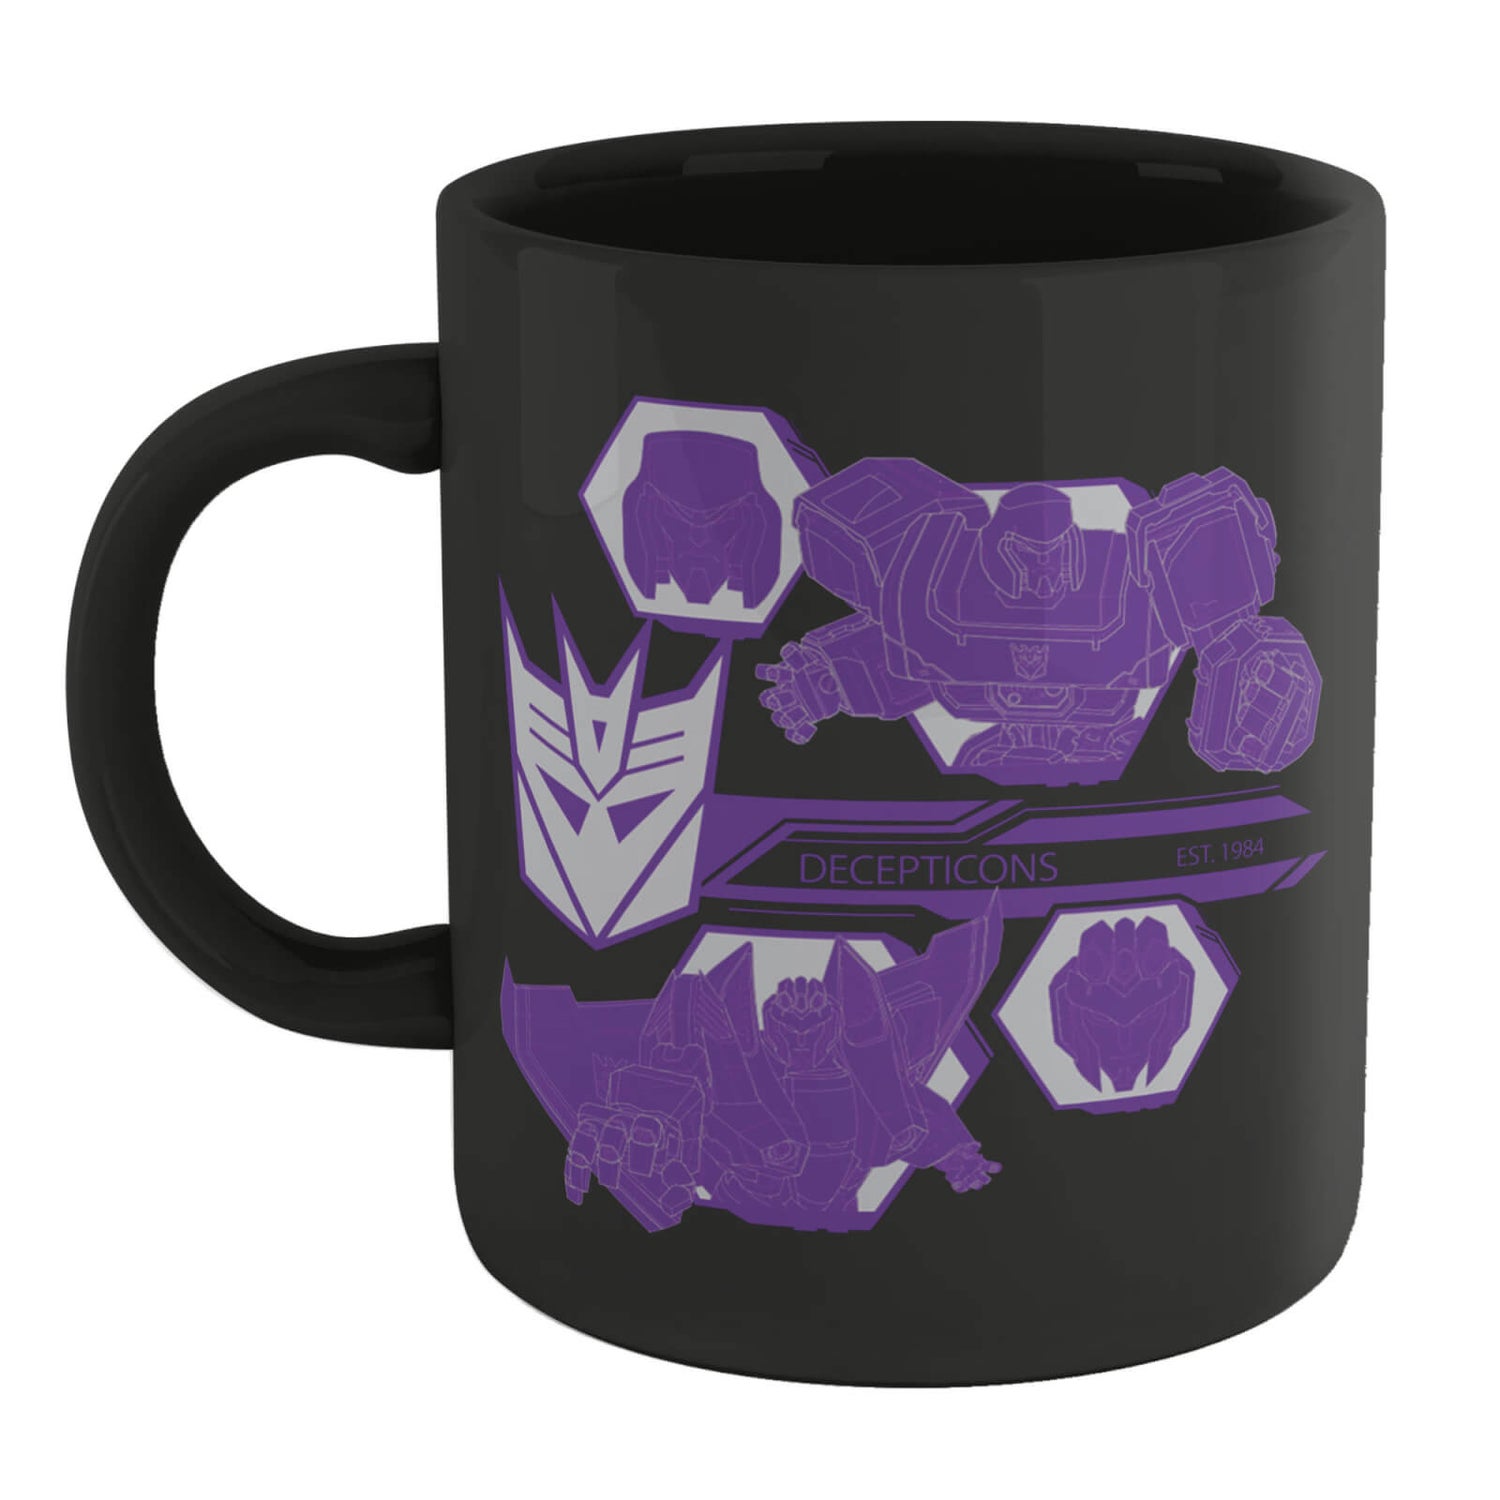 Transformers Decepticons Mug - Black